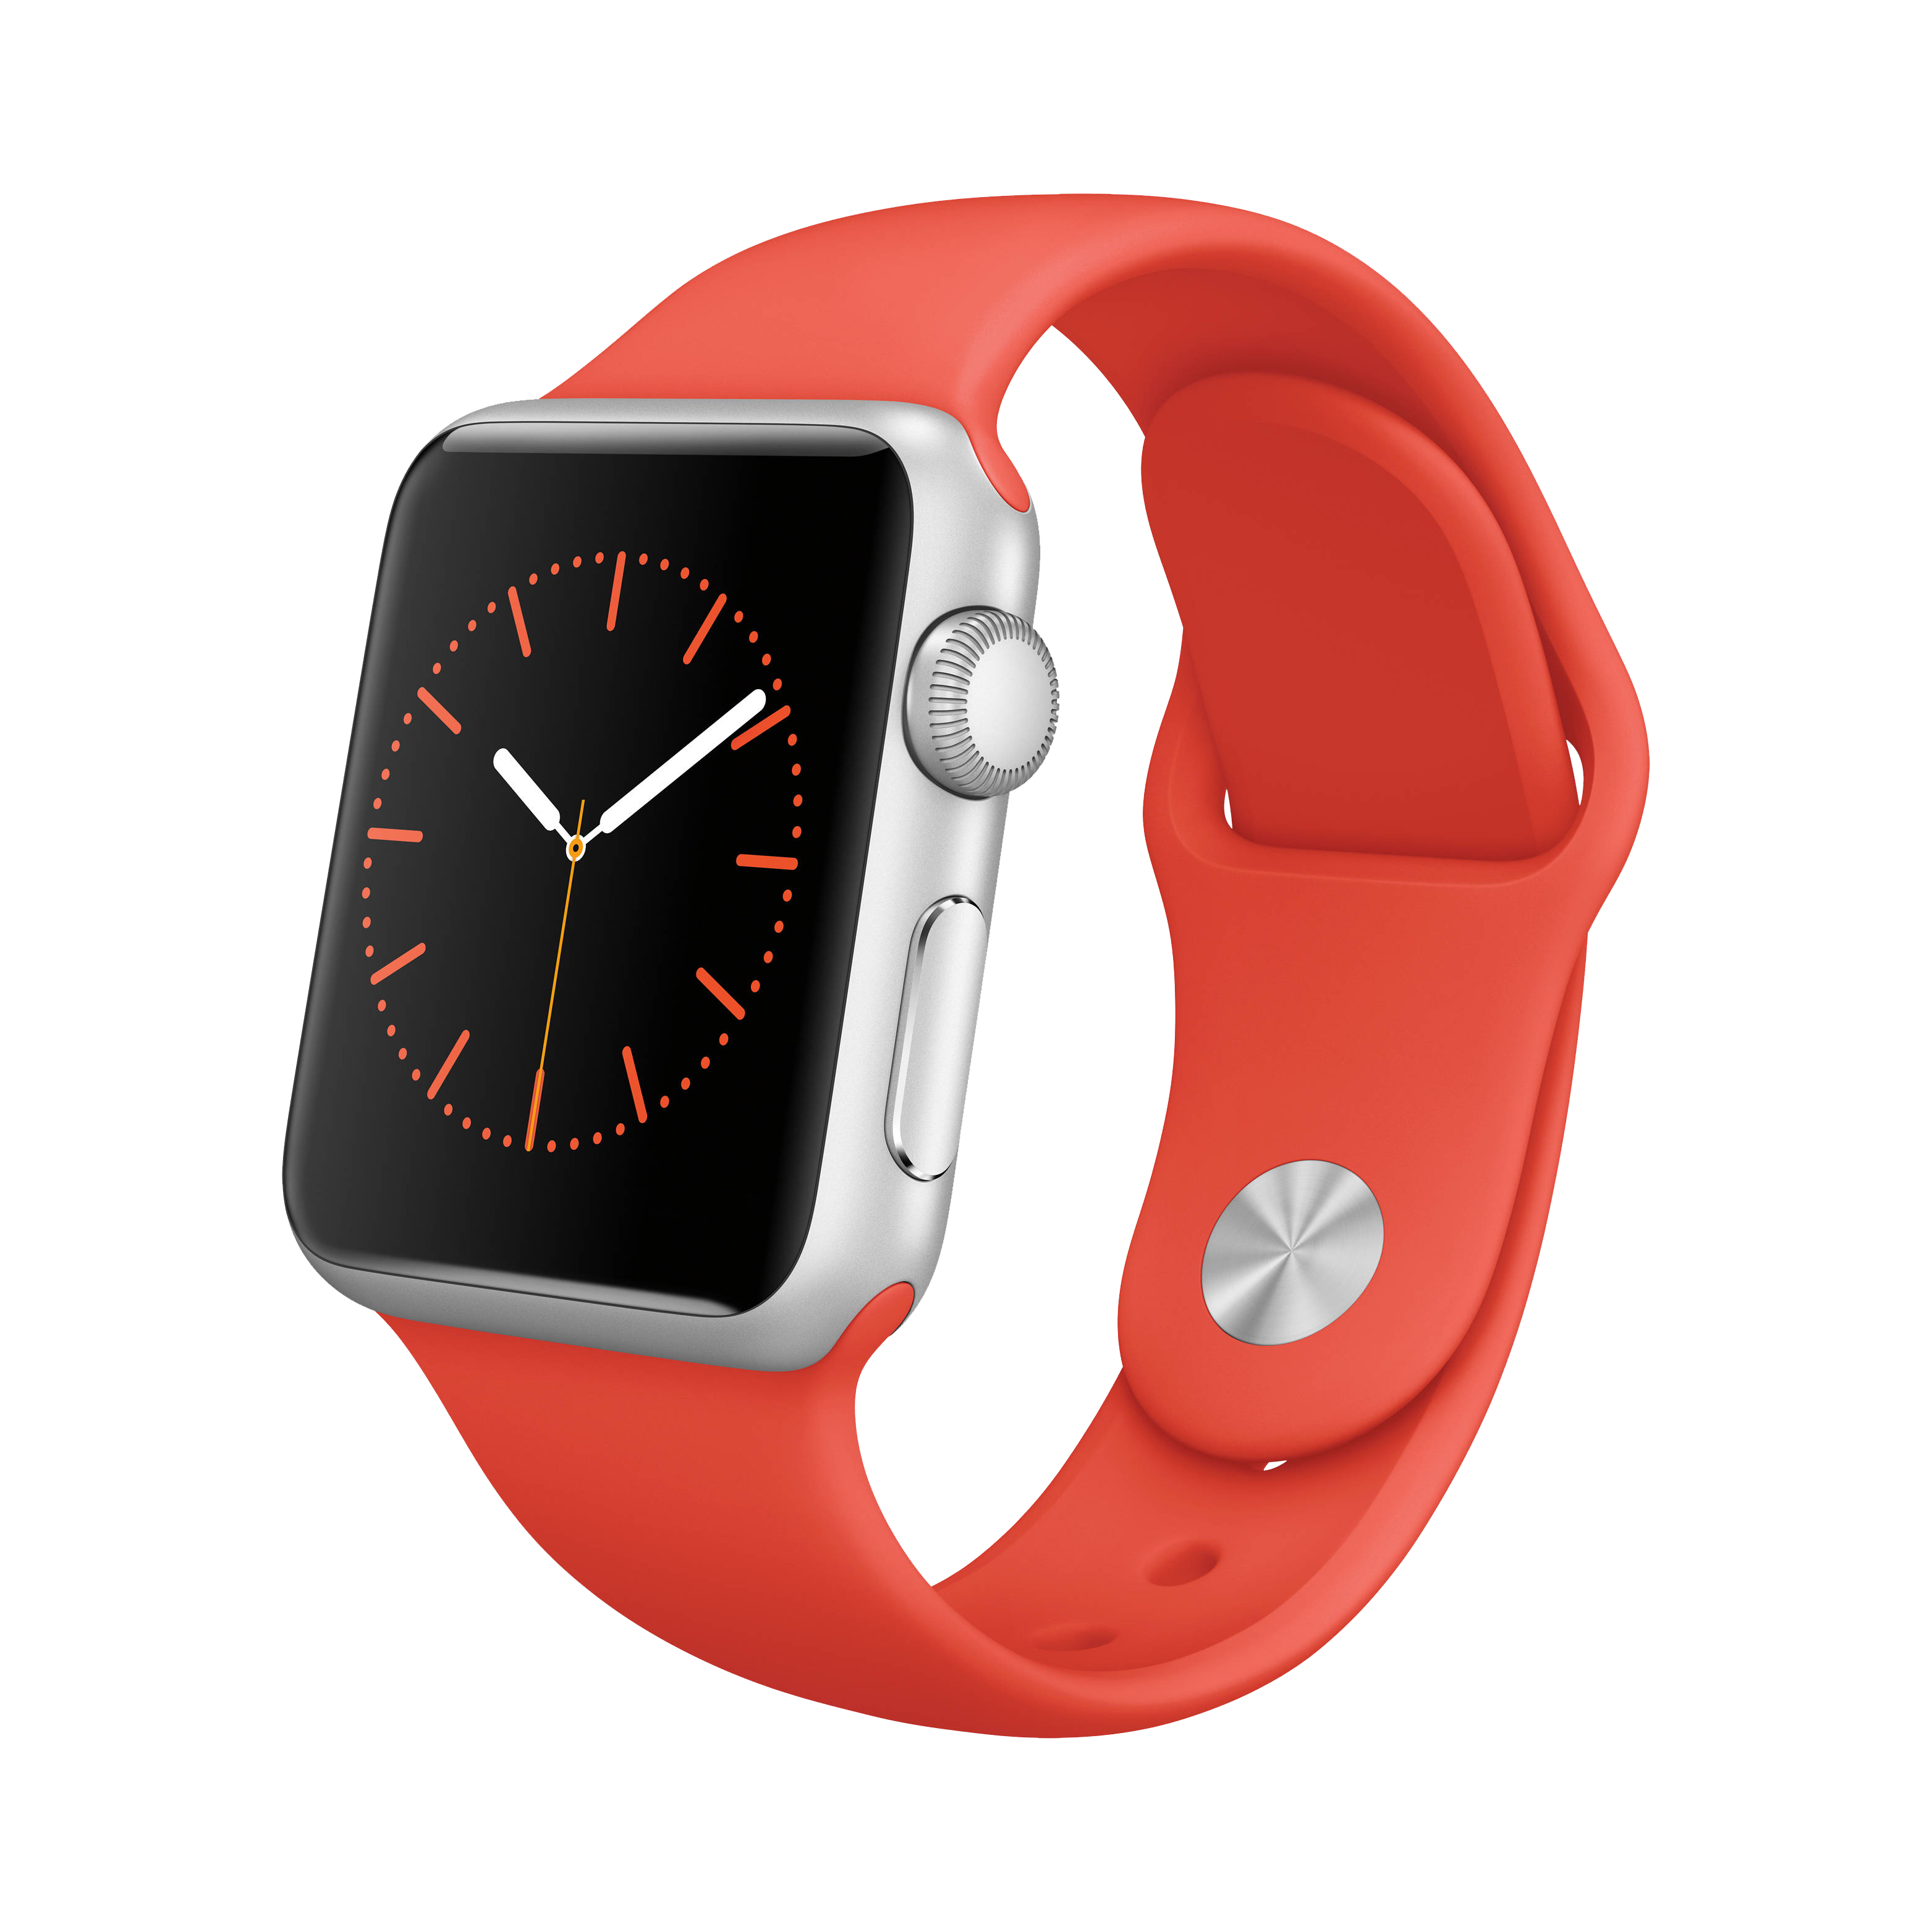 Часы 7 про макс. Смарт часы Эппл вотч. Apple IWATCH 1 42mm. Смарт часы эпл вотч 3. Часы эпл вотч 2.